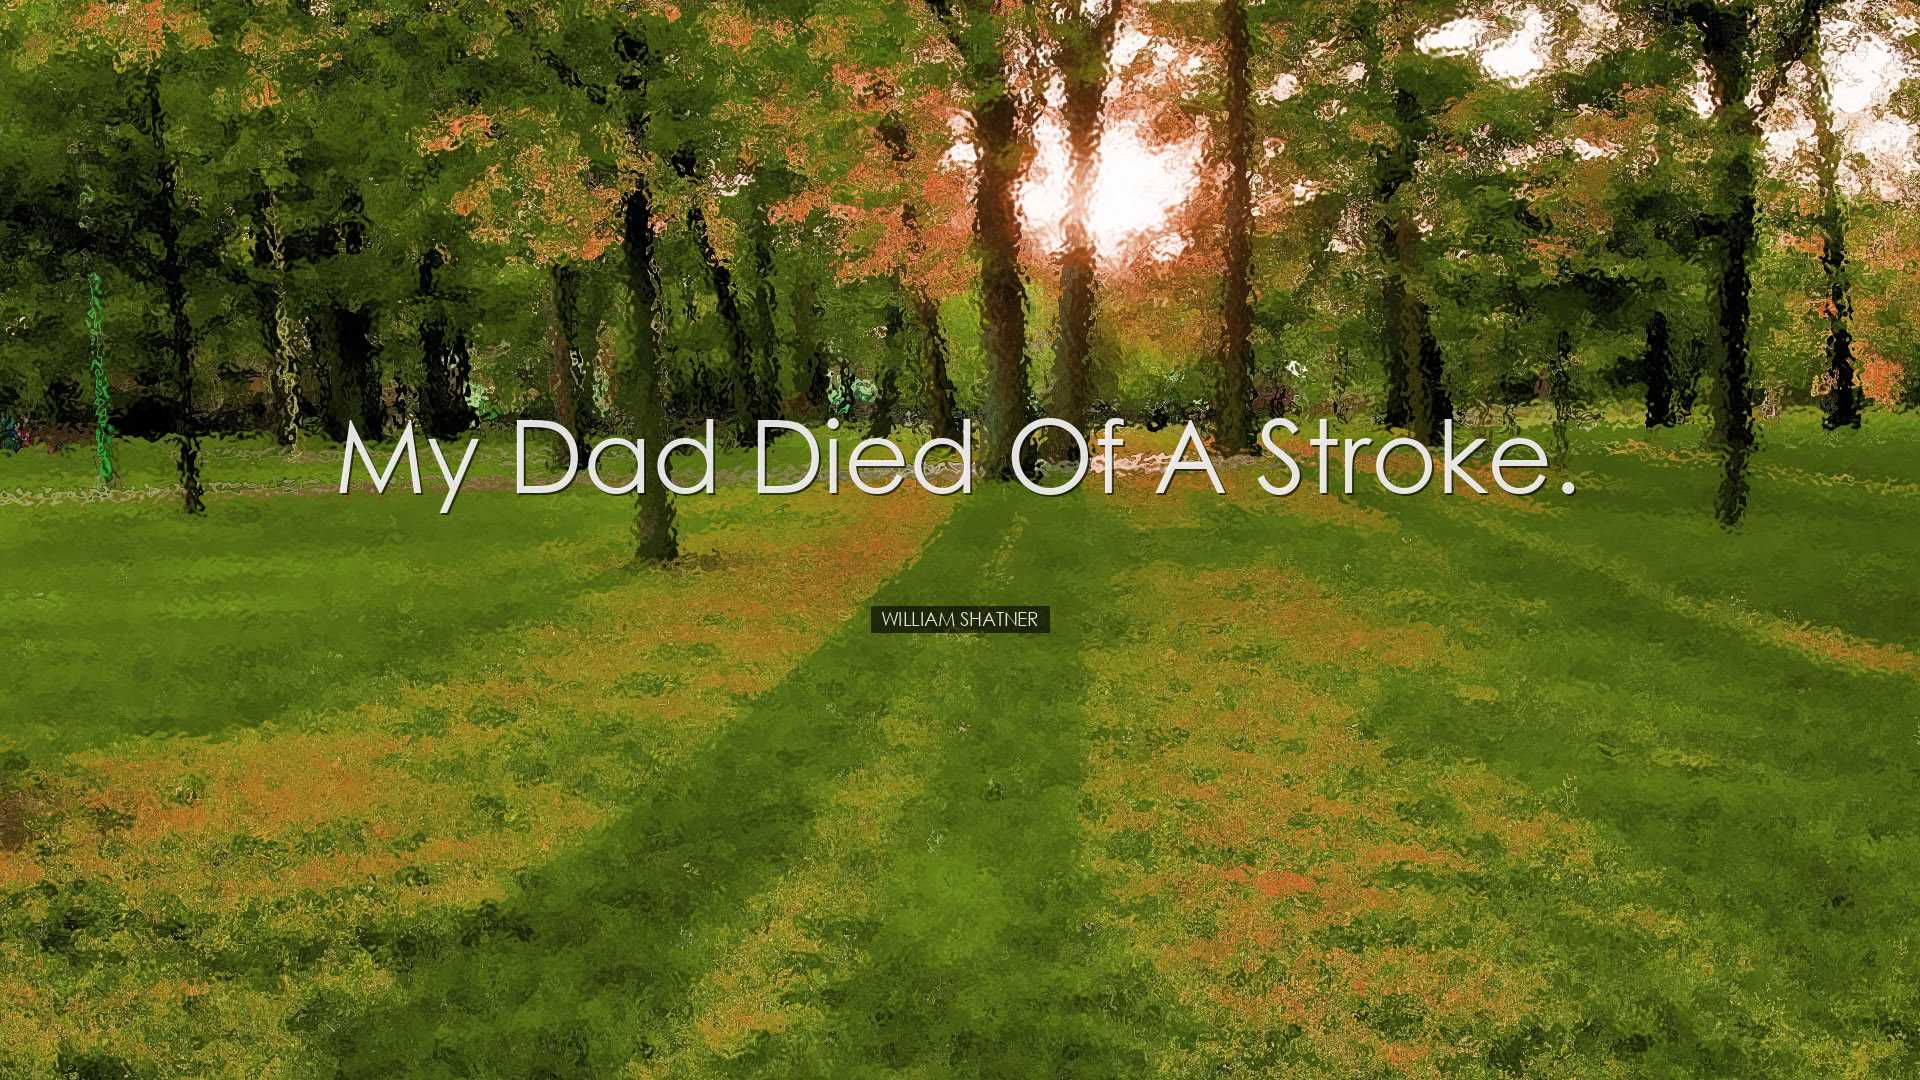 My dad died of a stroke. - William Shatner